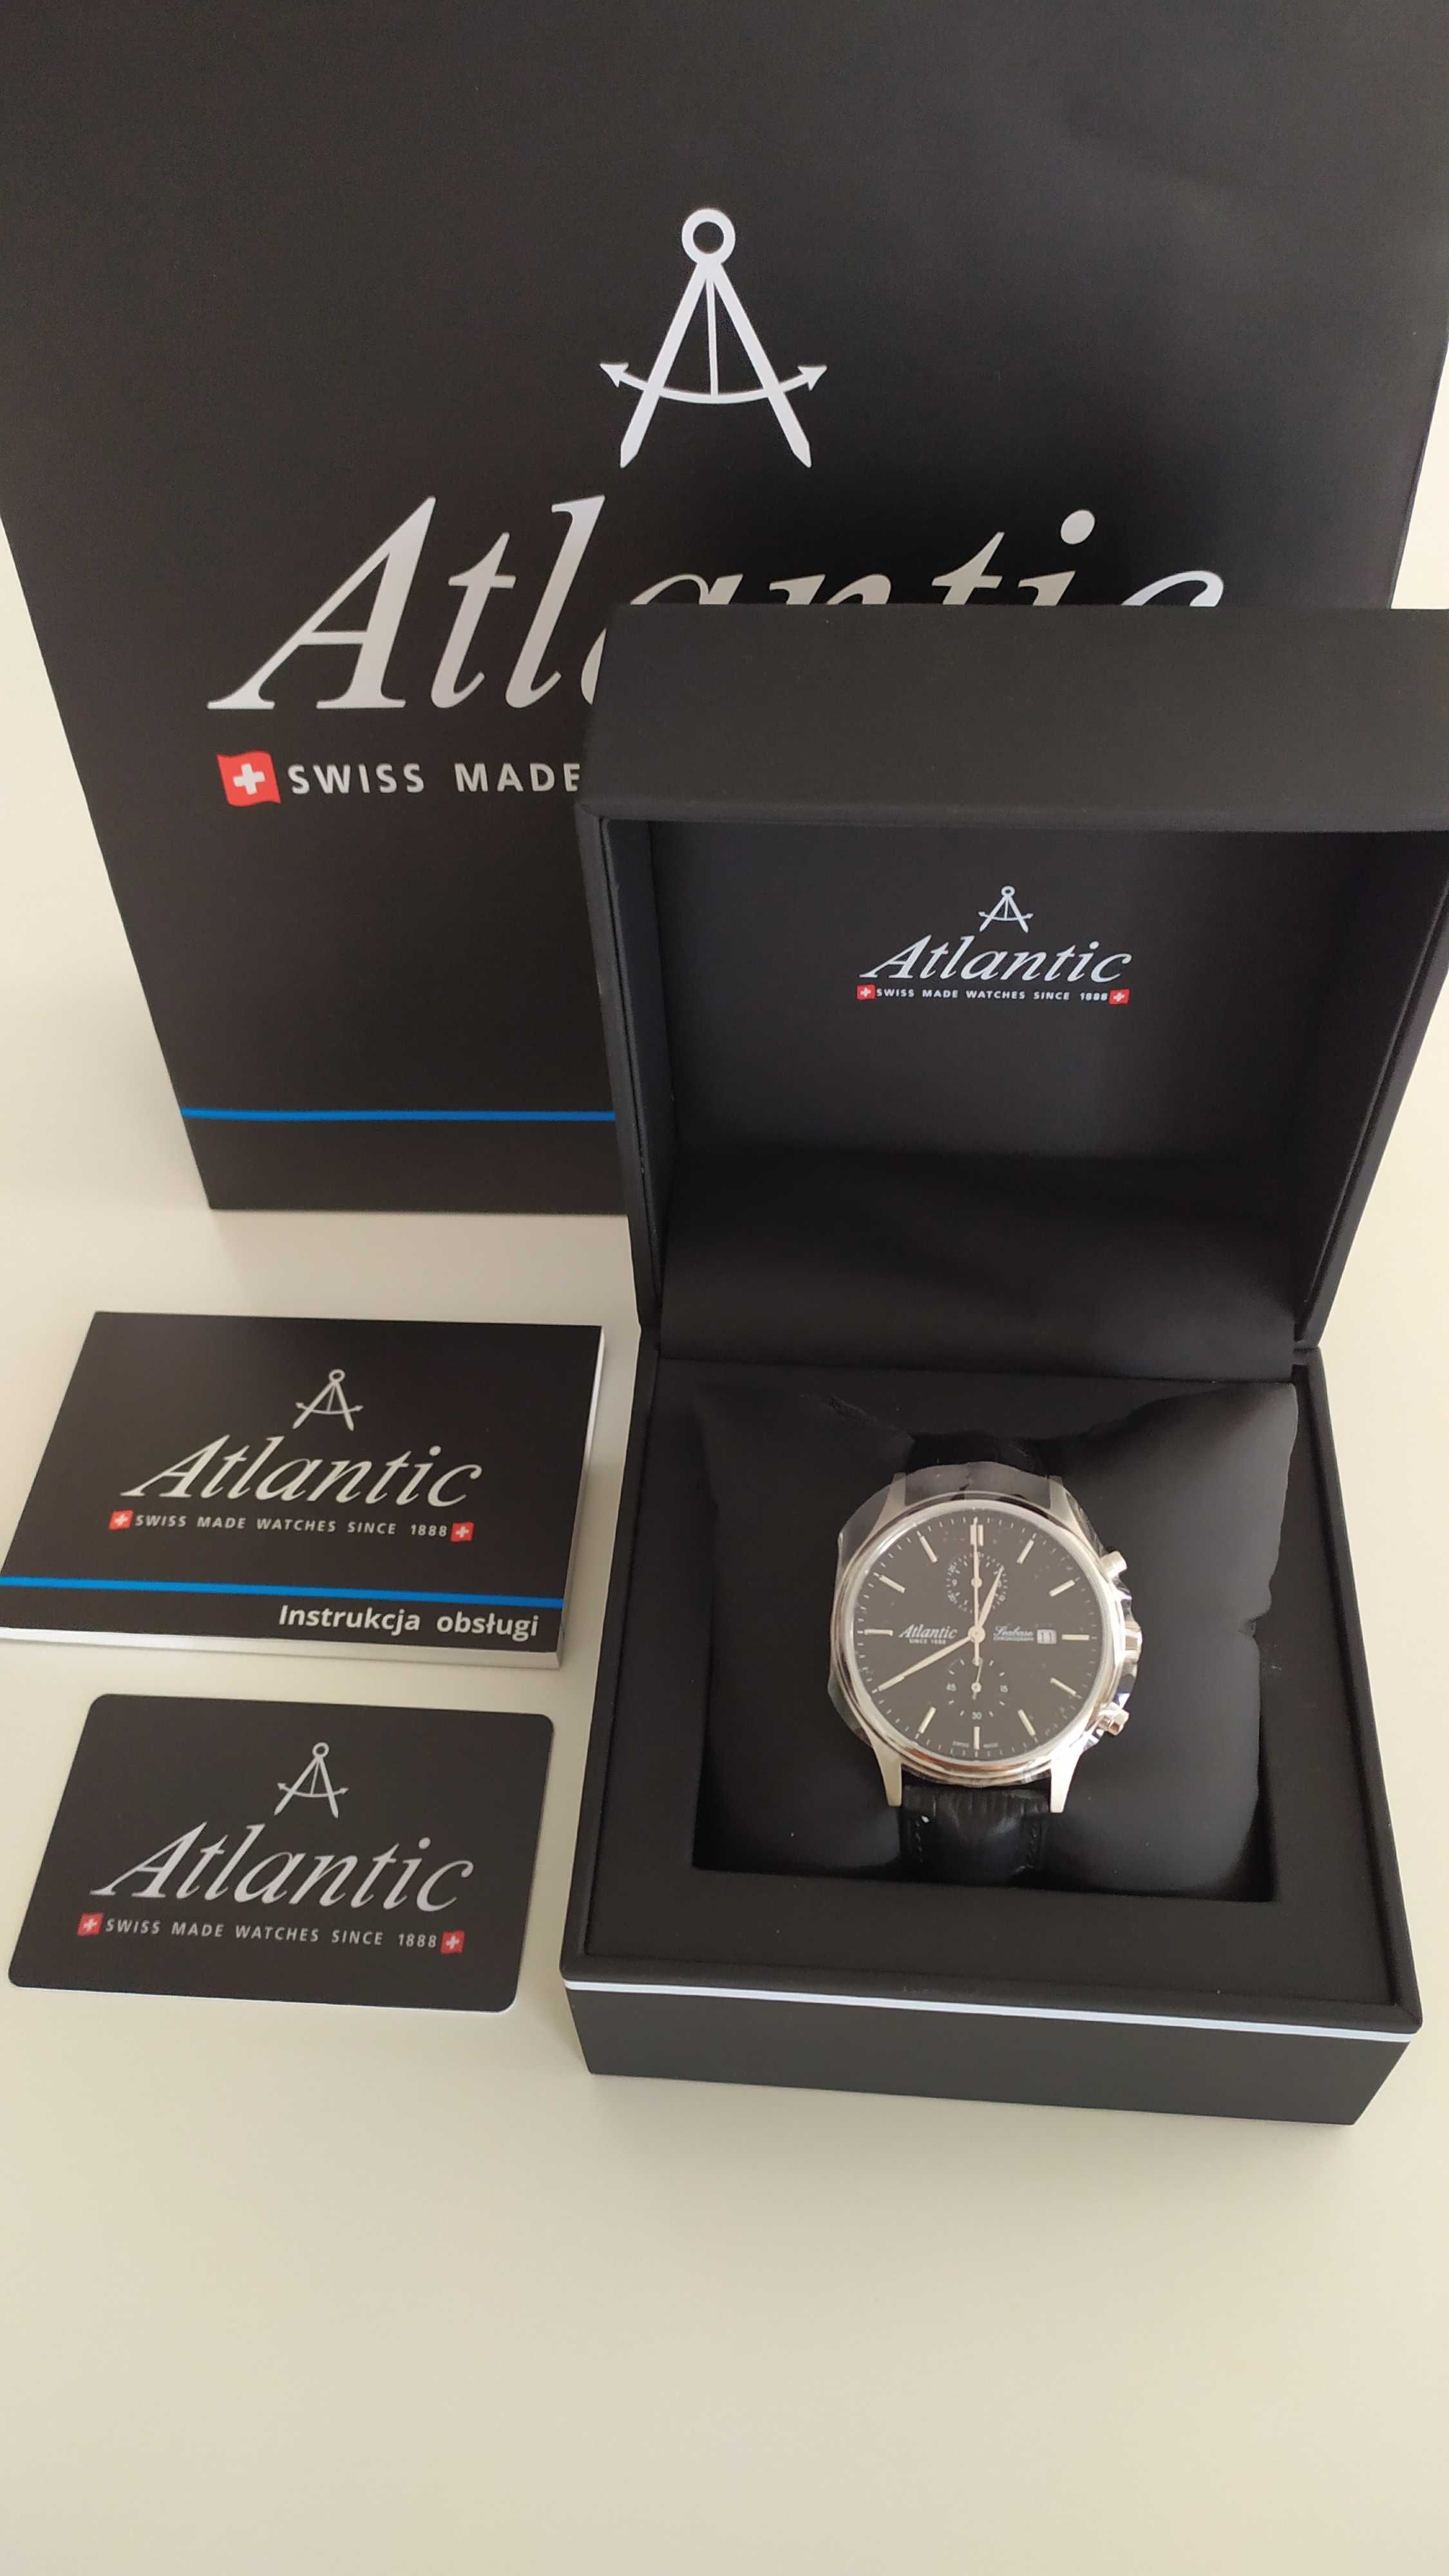 Nowy zegarek męski ATLANTIC - SUPER CENA!